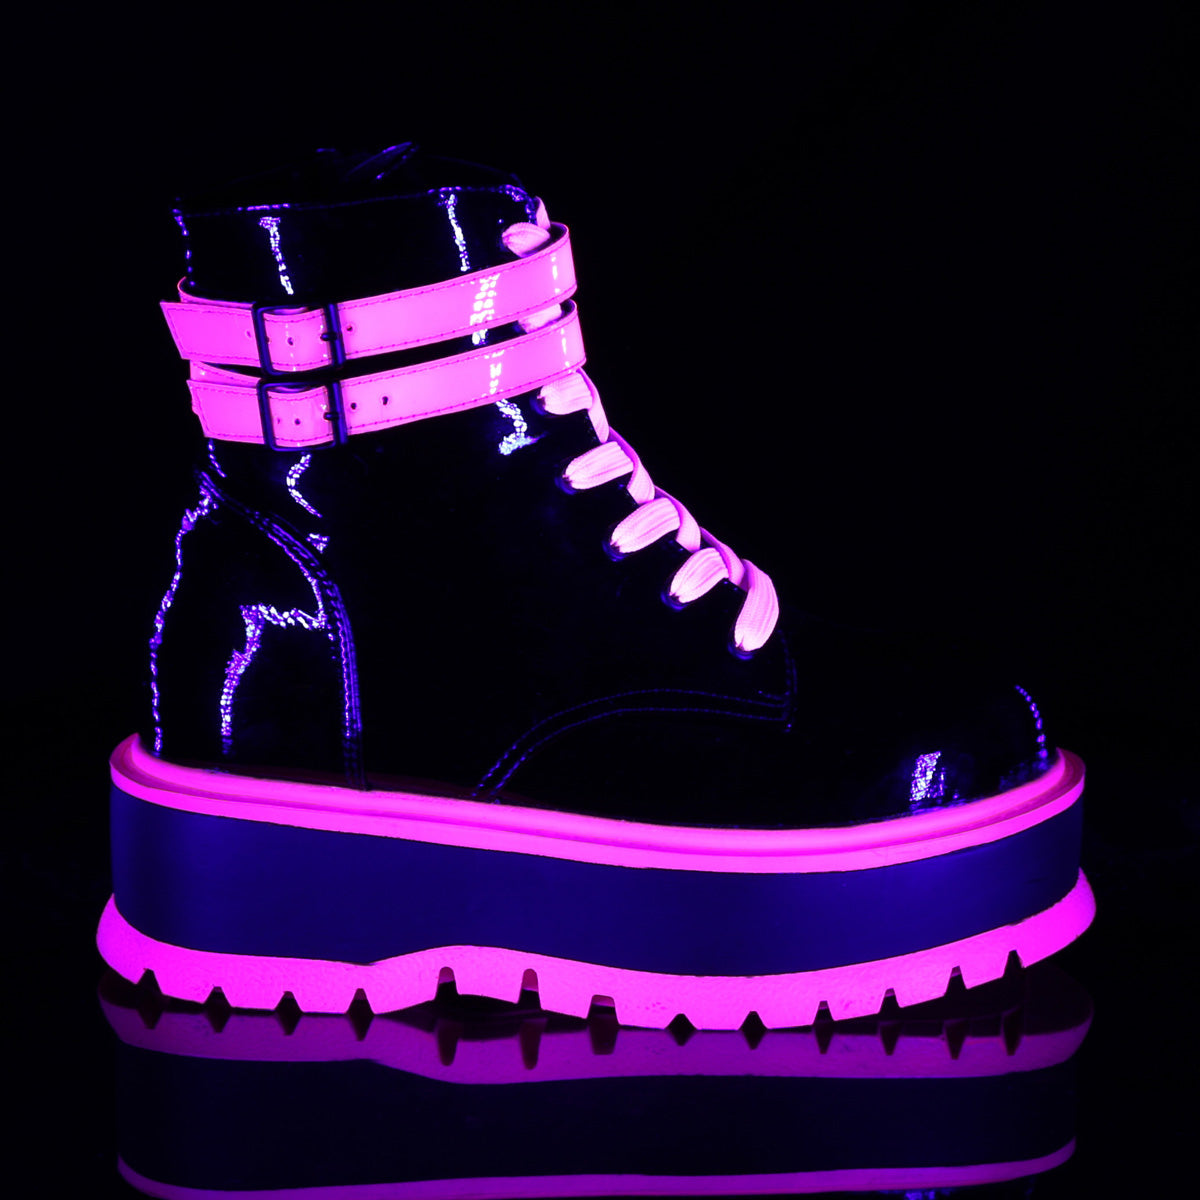 SLACKER-52 Black Patent-UV Iridescent Pink Ankle Boot Demonia